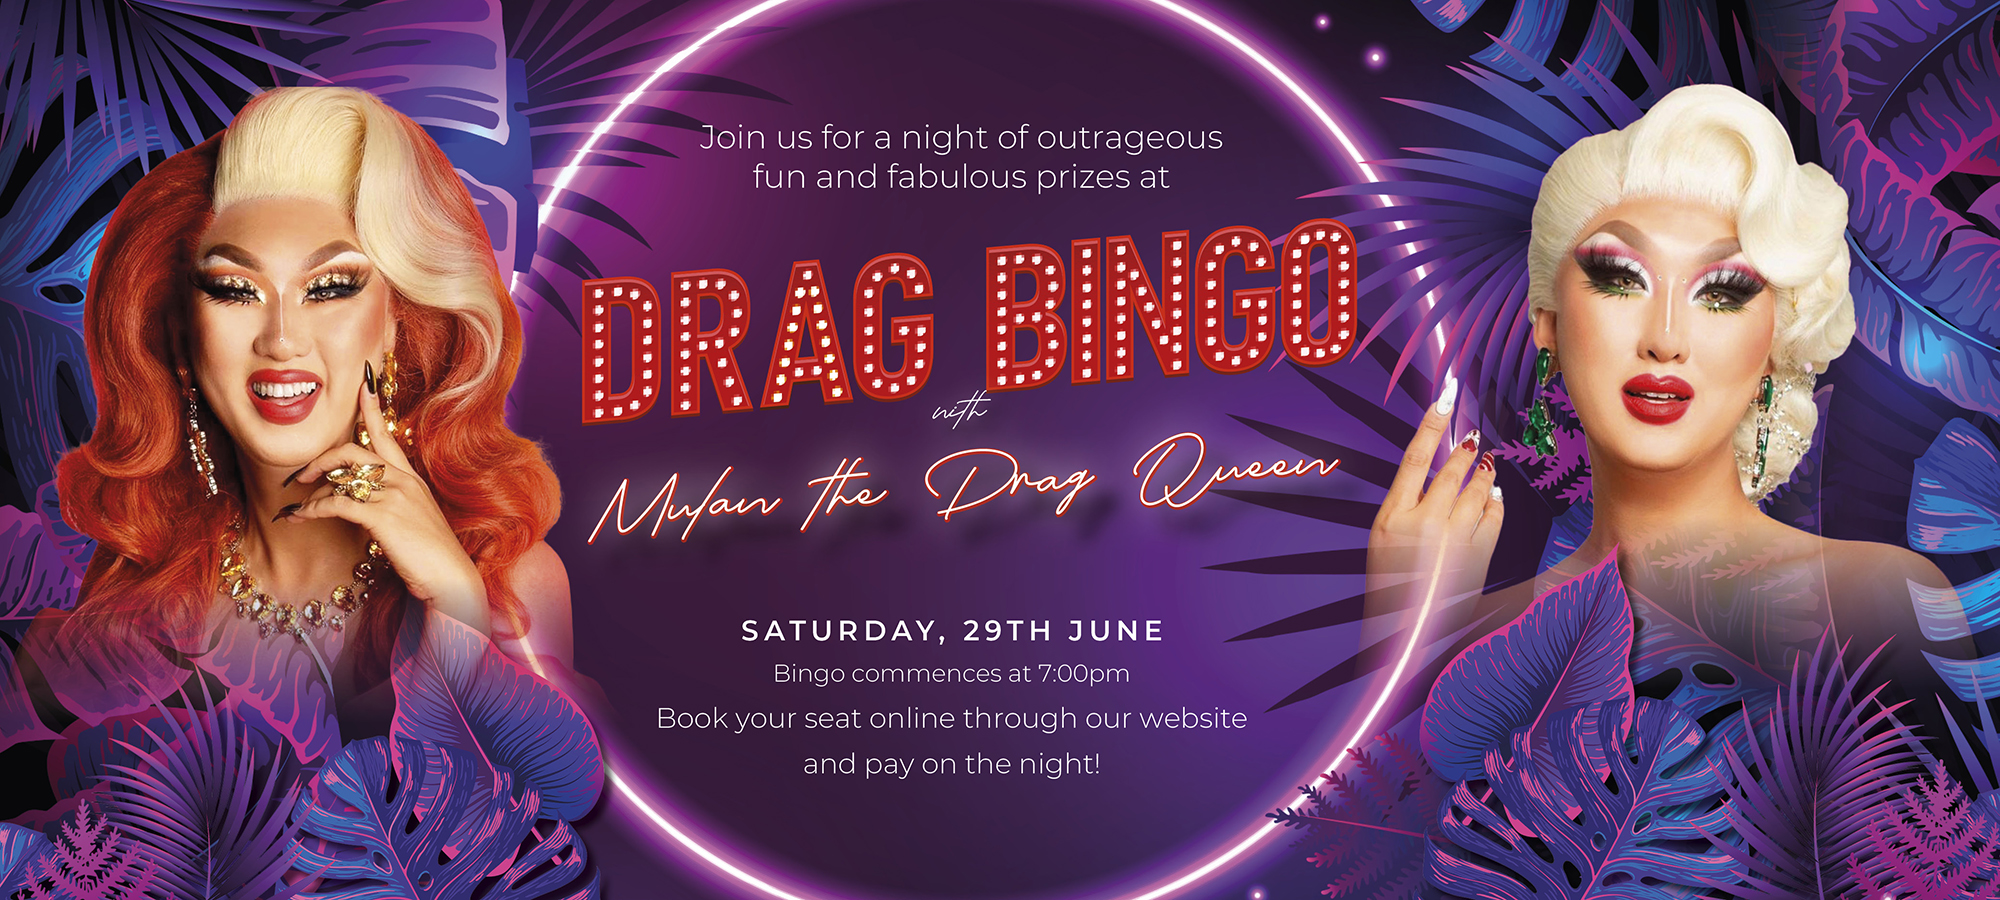 Drag Bingo with Mulan the Drag Queen! – June